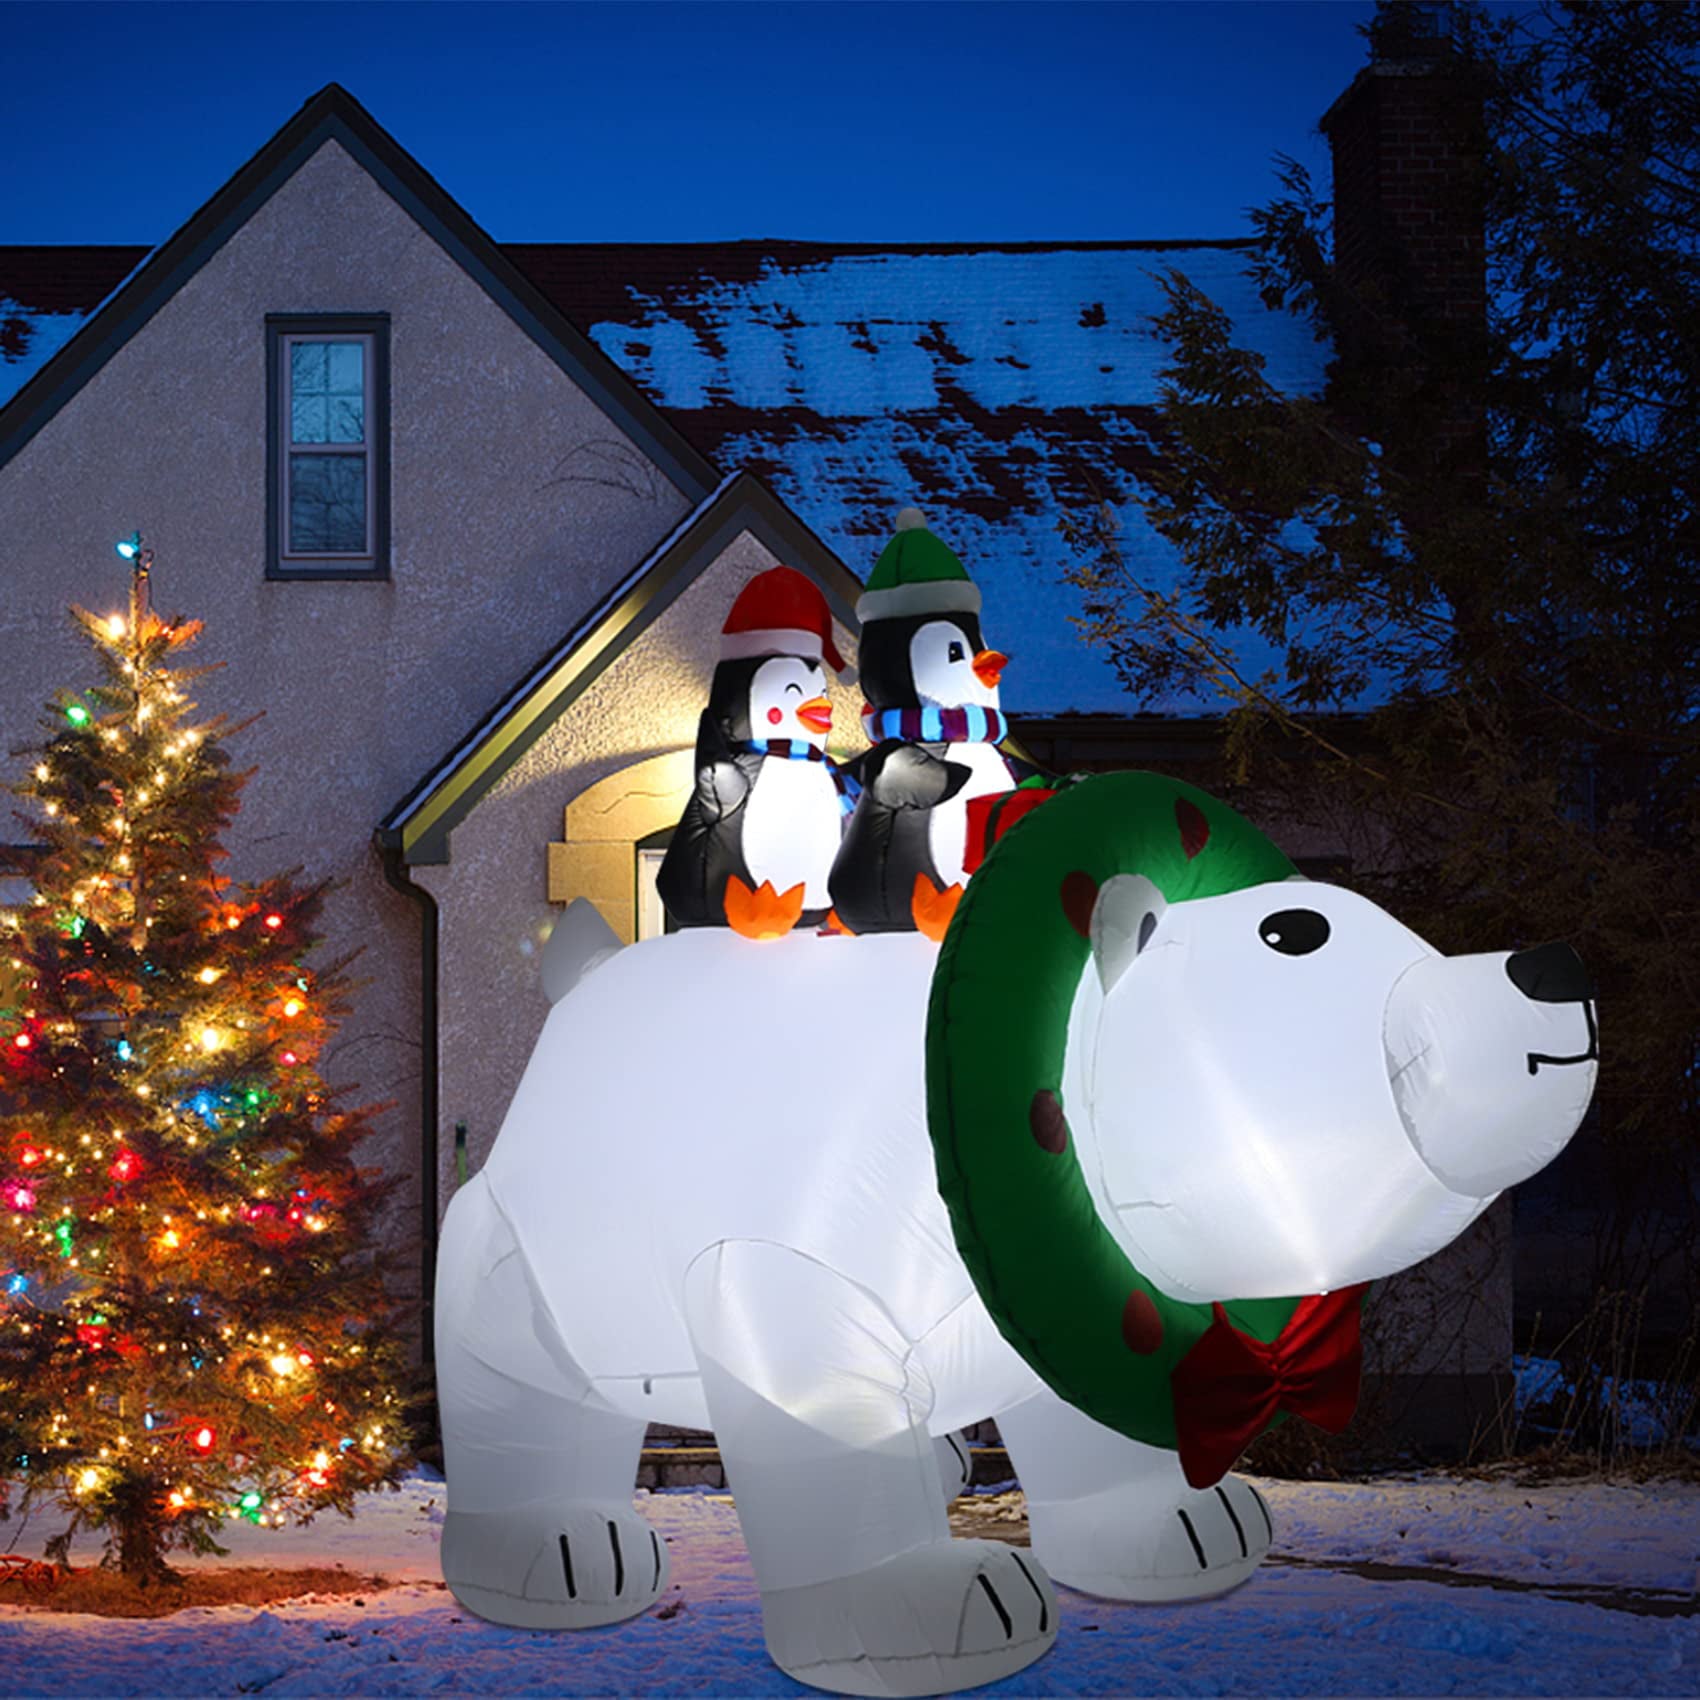 6FT Giant Christmas Inflatable Polar Bear Decorations Outdoor Christmas Inflatables with Led Lights for Holiday Yard Decor Christmas Xmas Indoor Outdoor Yard Decorations